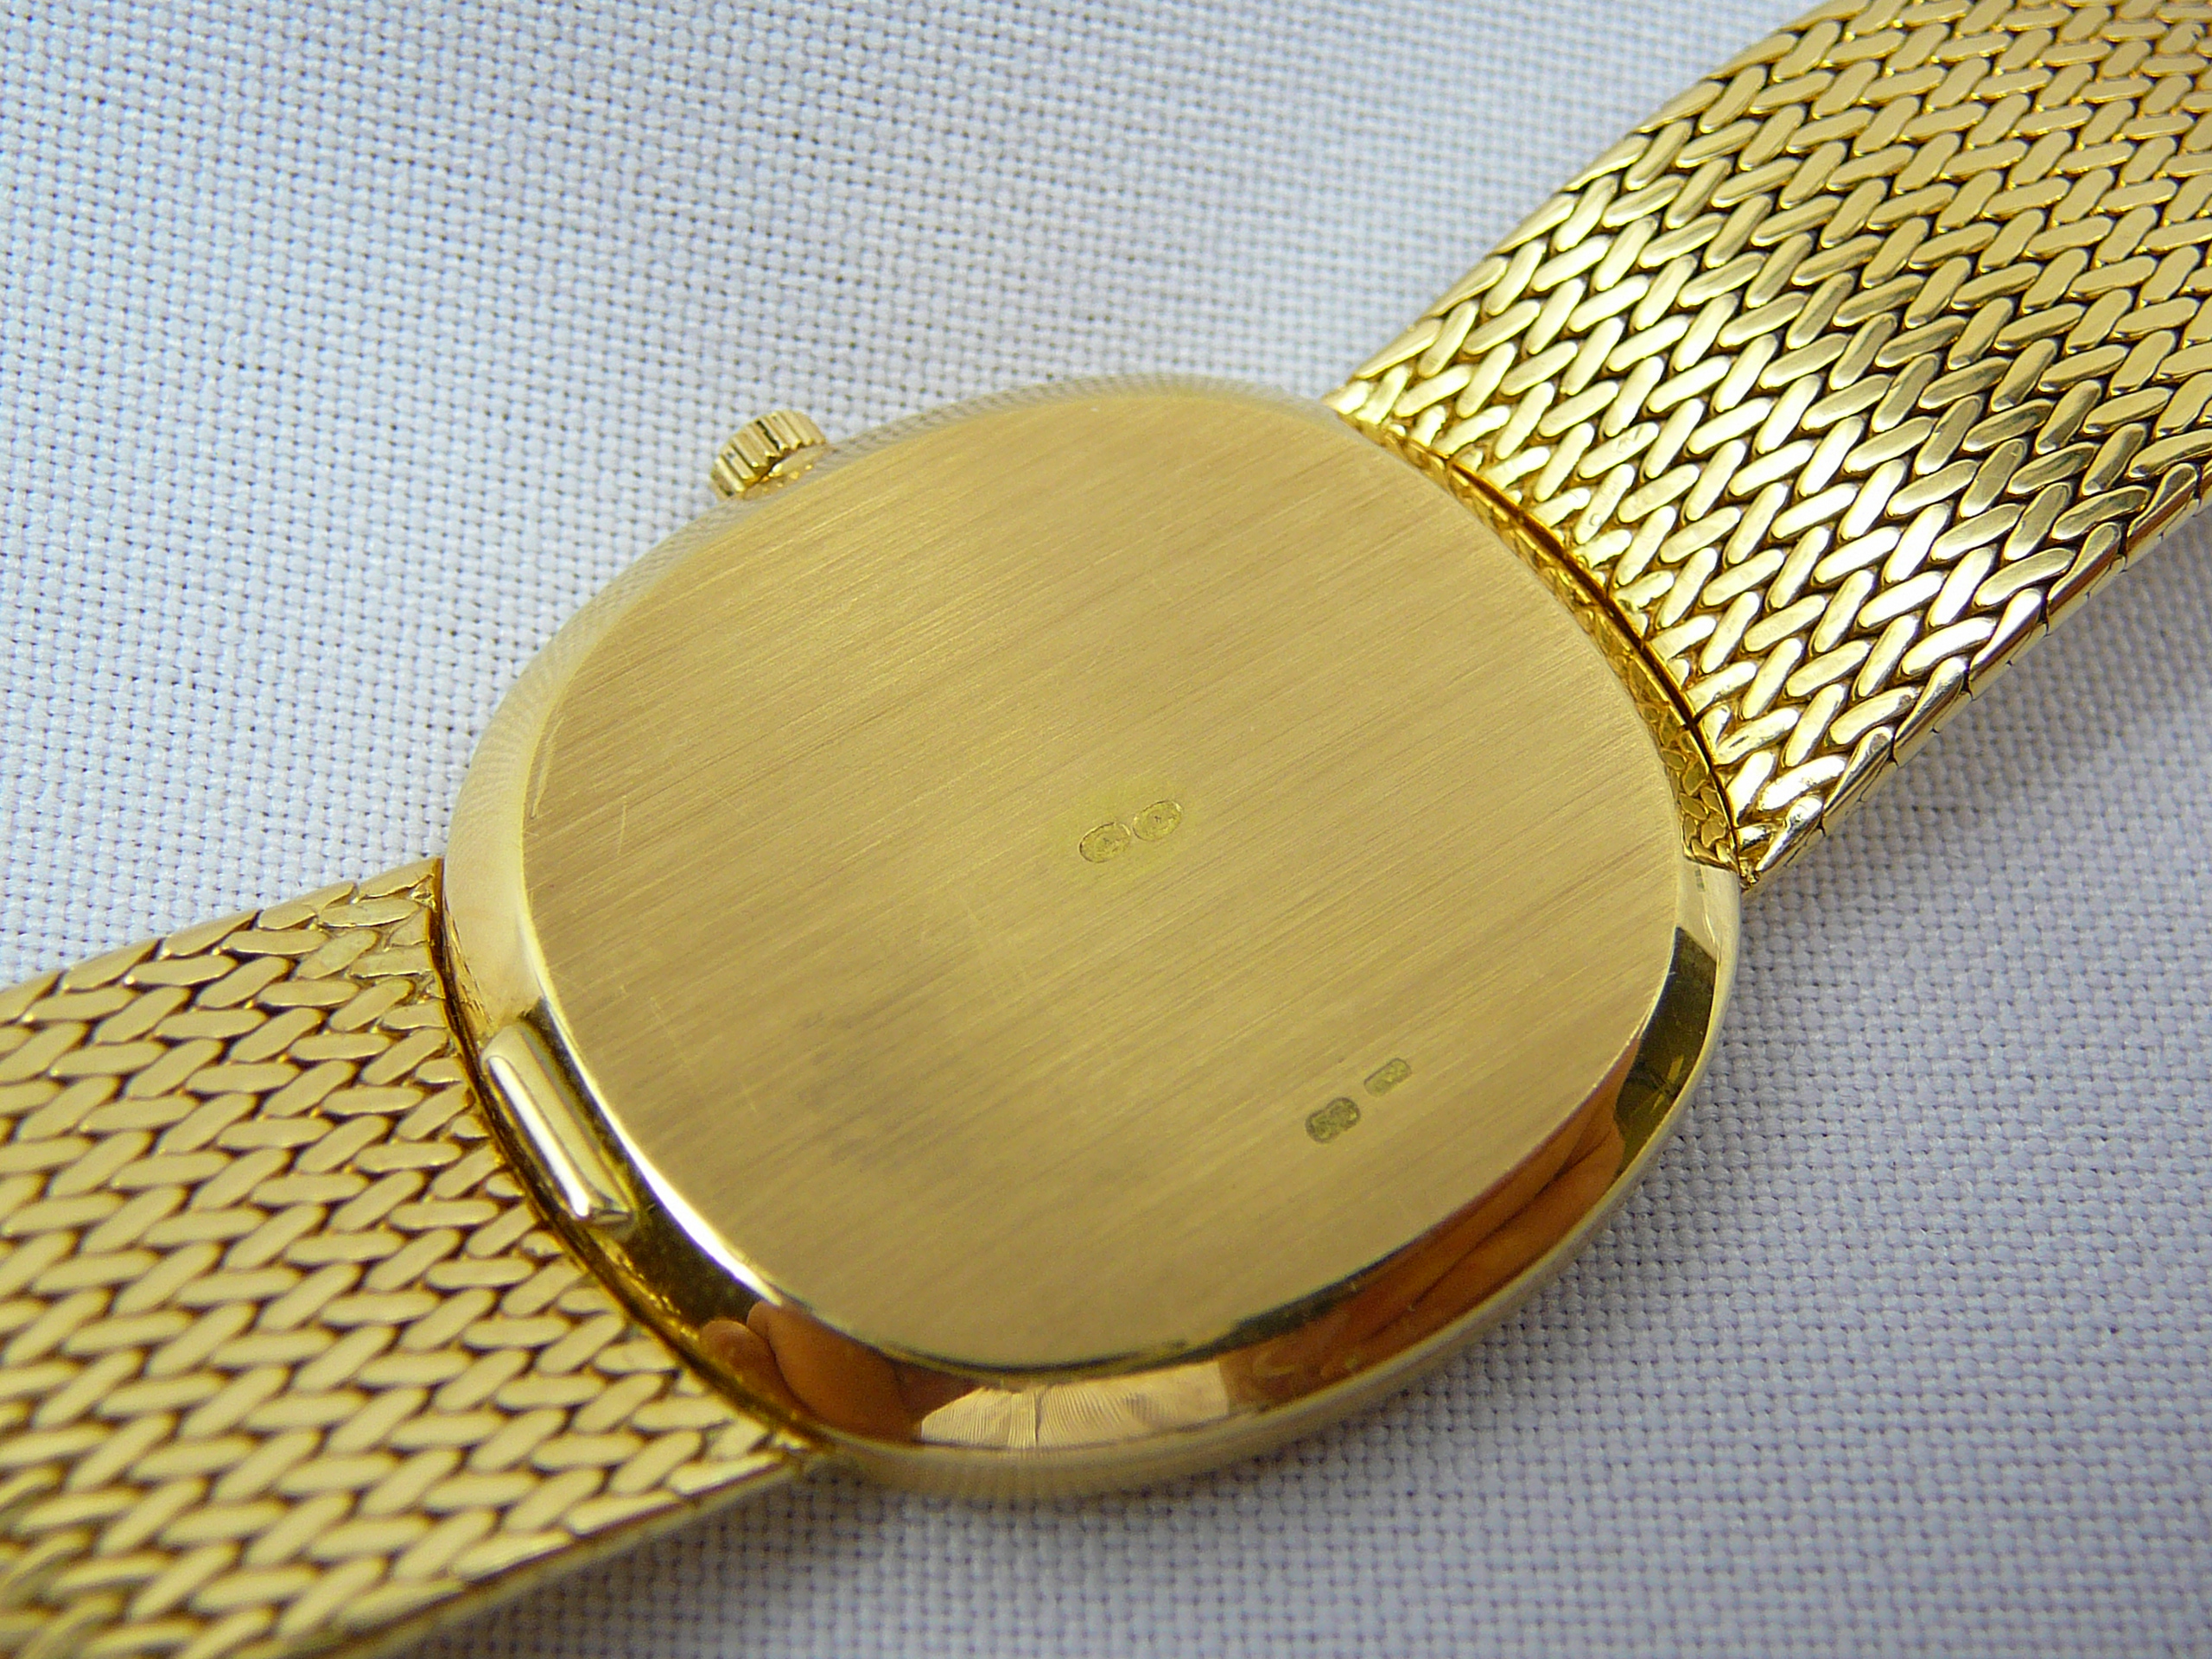 Gents Patek Philippe 18ct gold wrist watch - Image 5 of 7